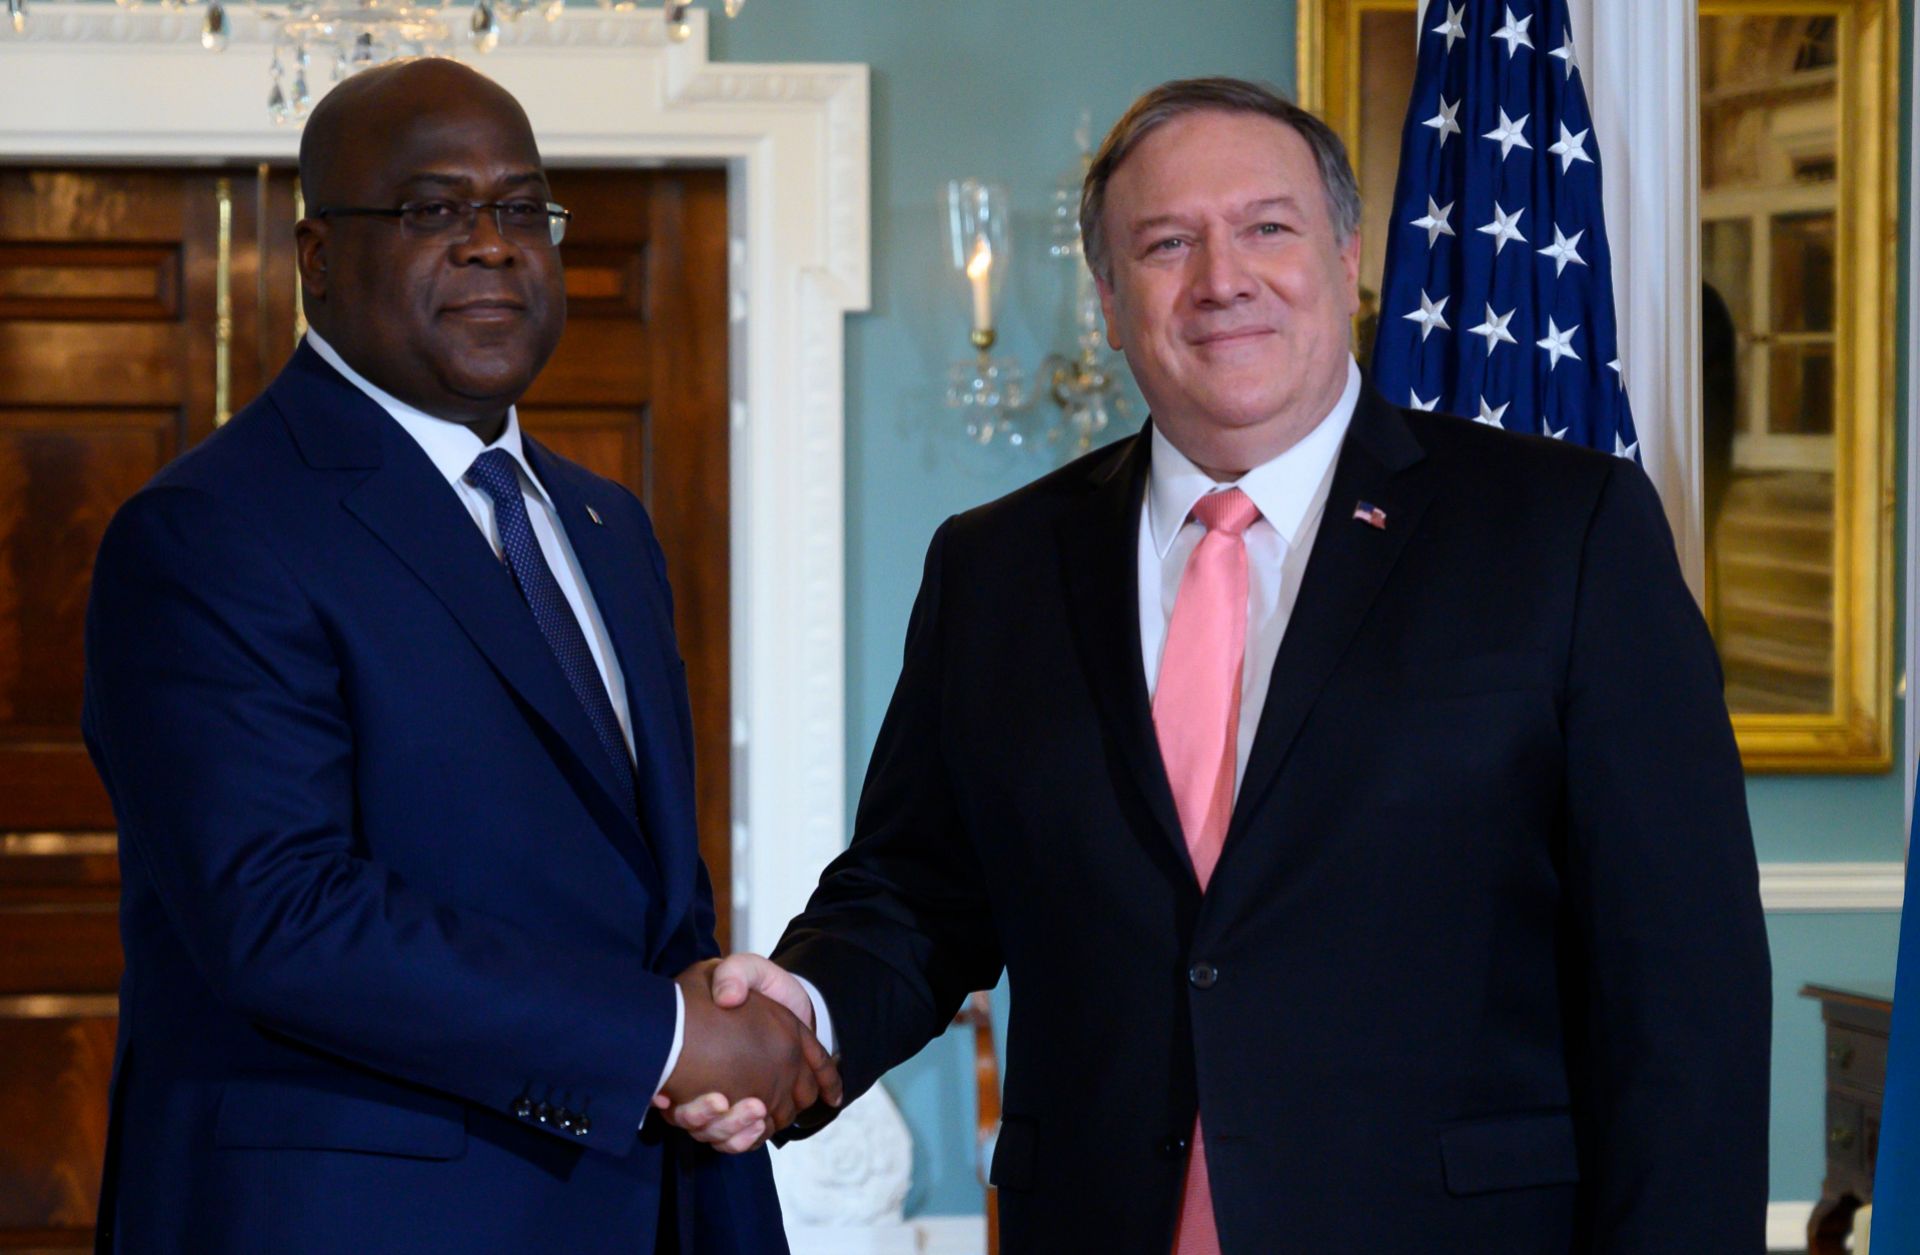 U.S. Secretary of State Mike Pompeo and Democratic Republic of the Congo President Felix Tshisekedi meet in Washington on April 3, 2019.